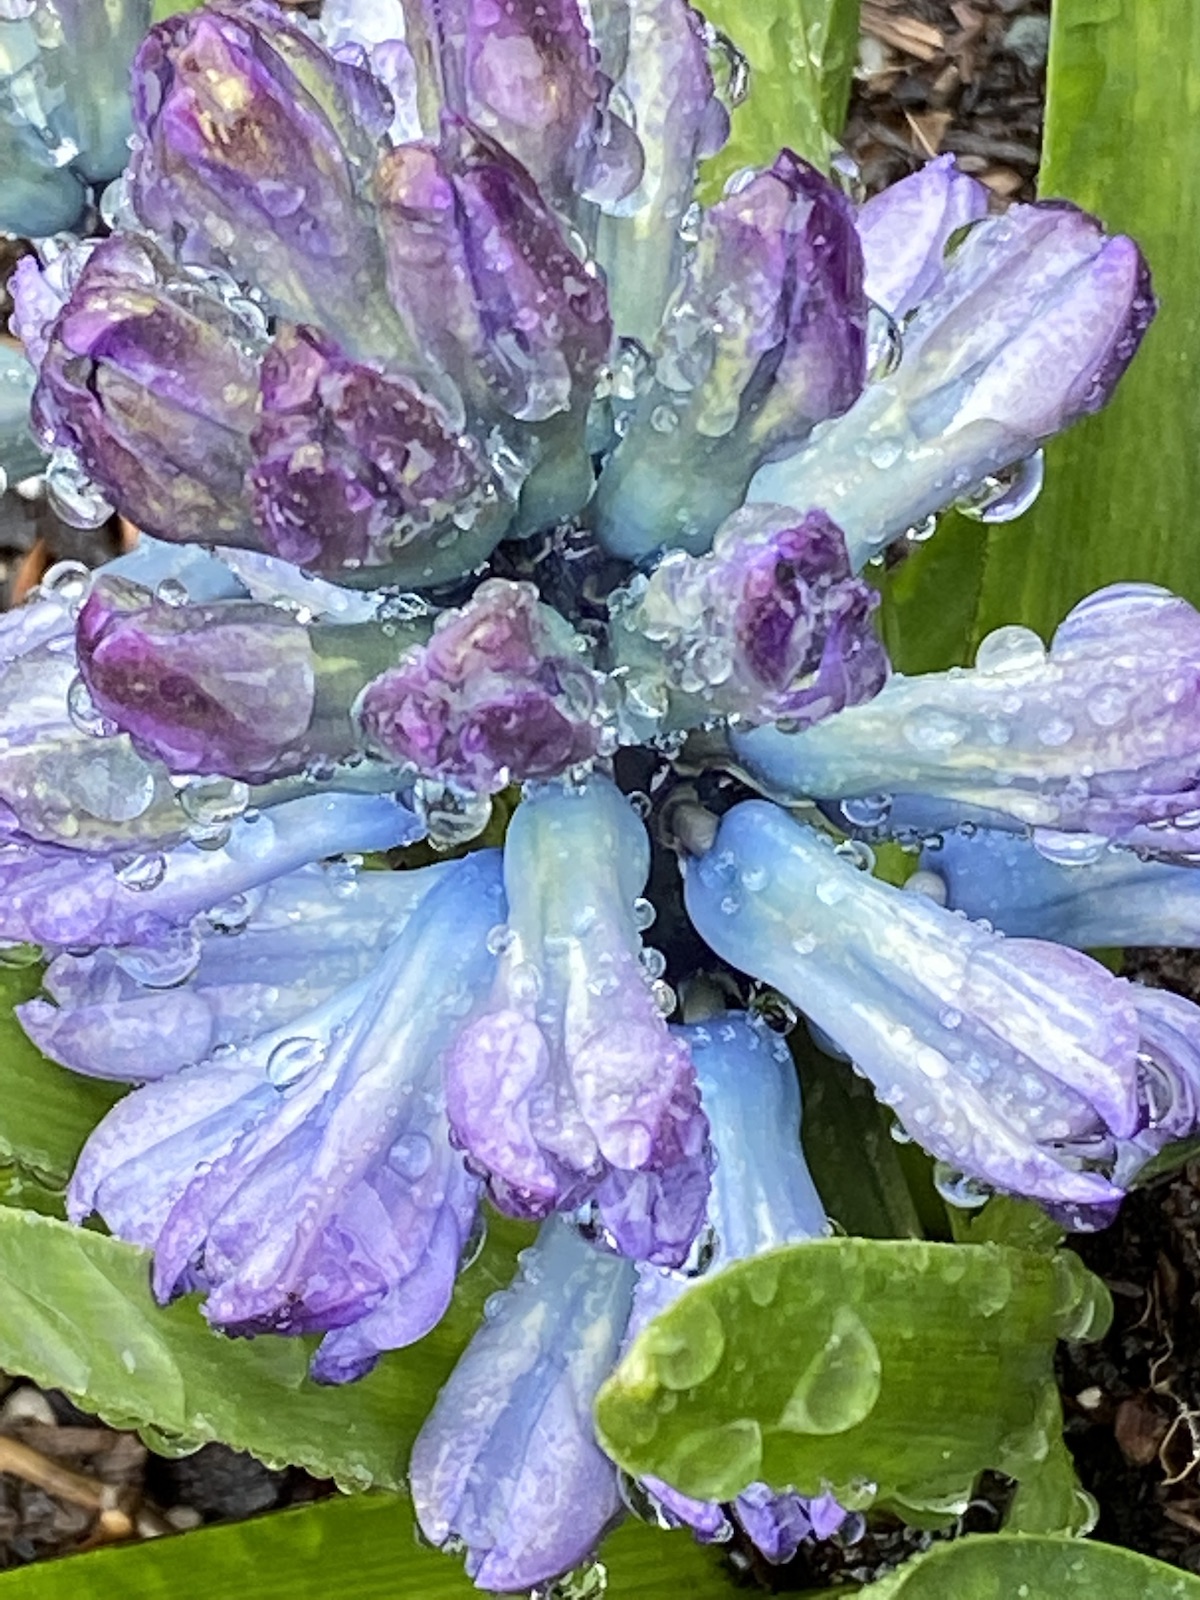 rainy day hyacinth_archival digital print by Canadian photographer Barbra Edwards Gulf Islands, BC